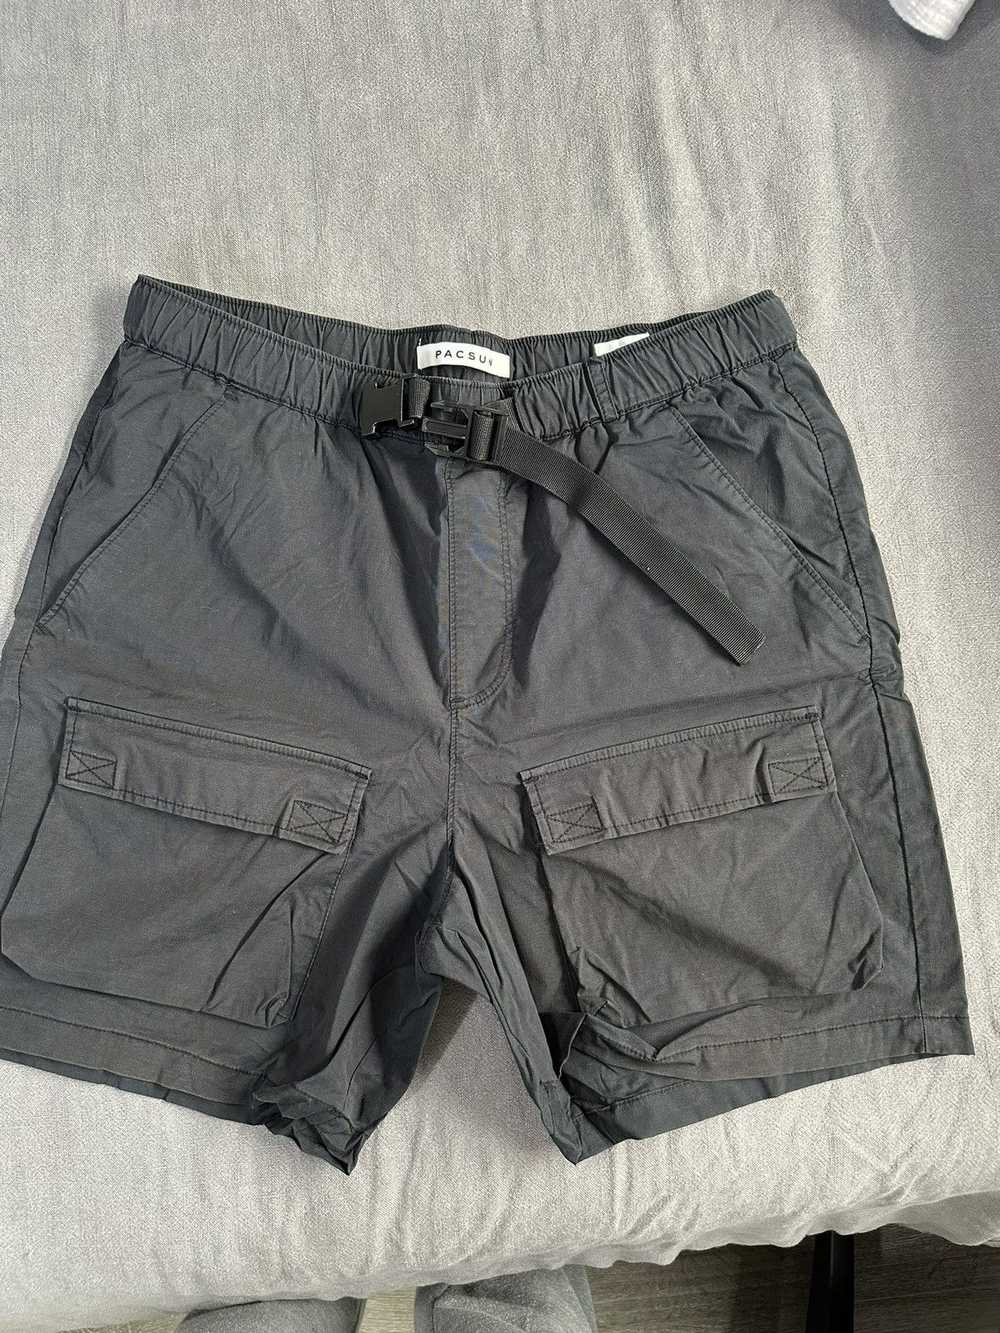 Pacsun Black Cargo Pacsun Shorts Medium - image 1